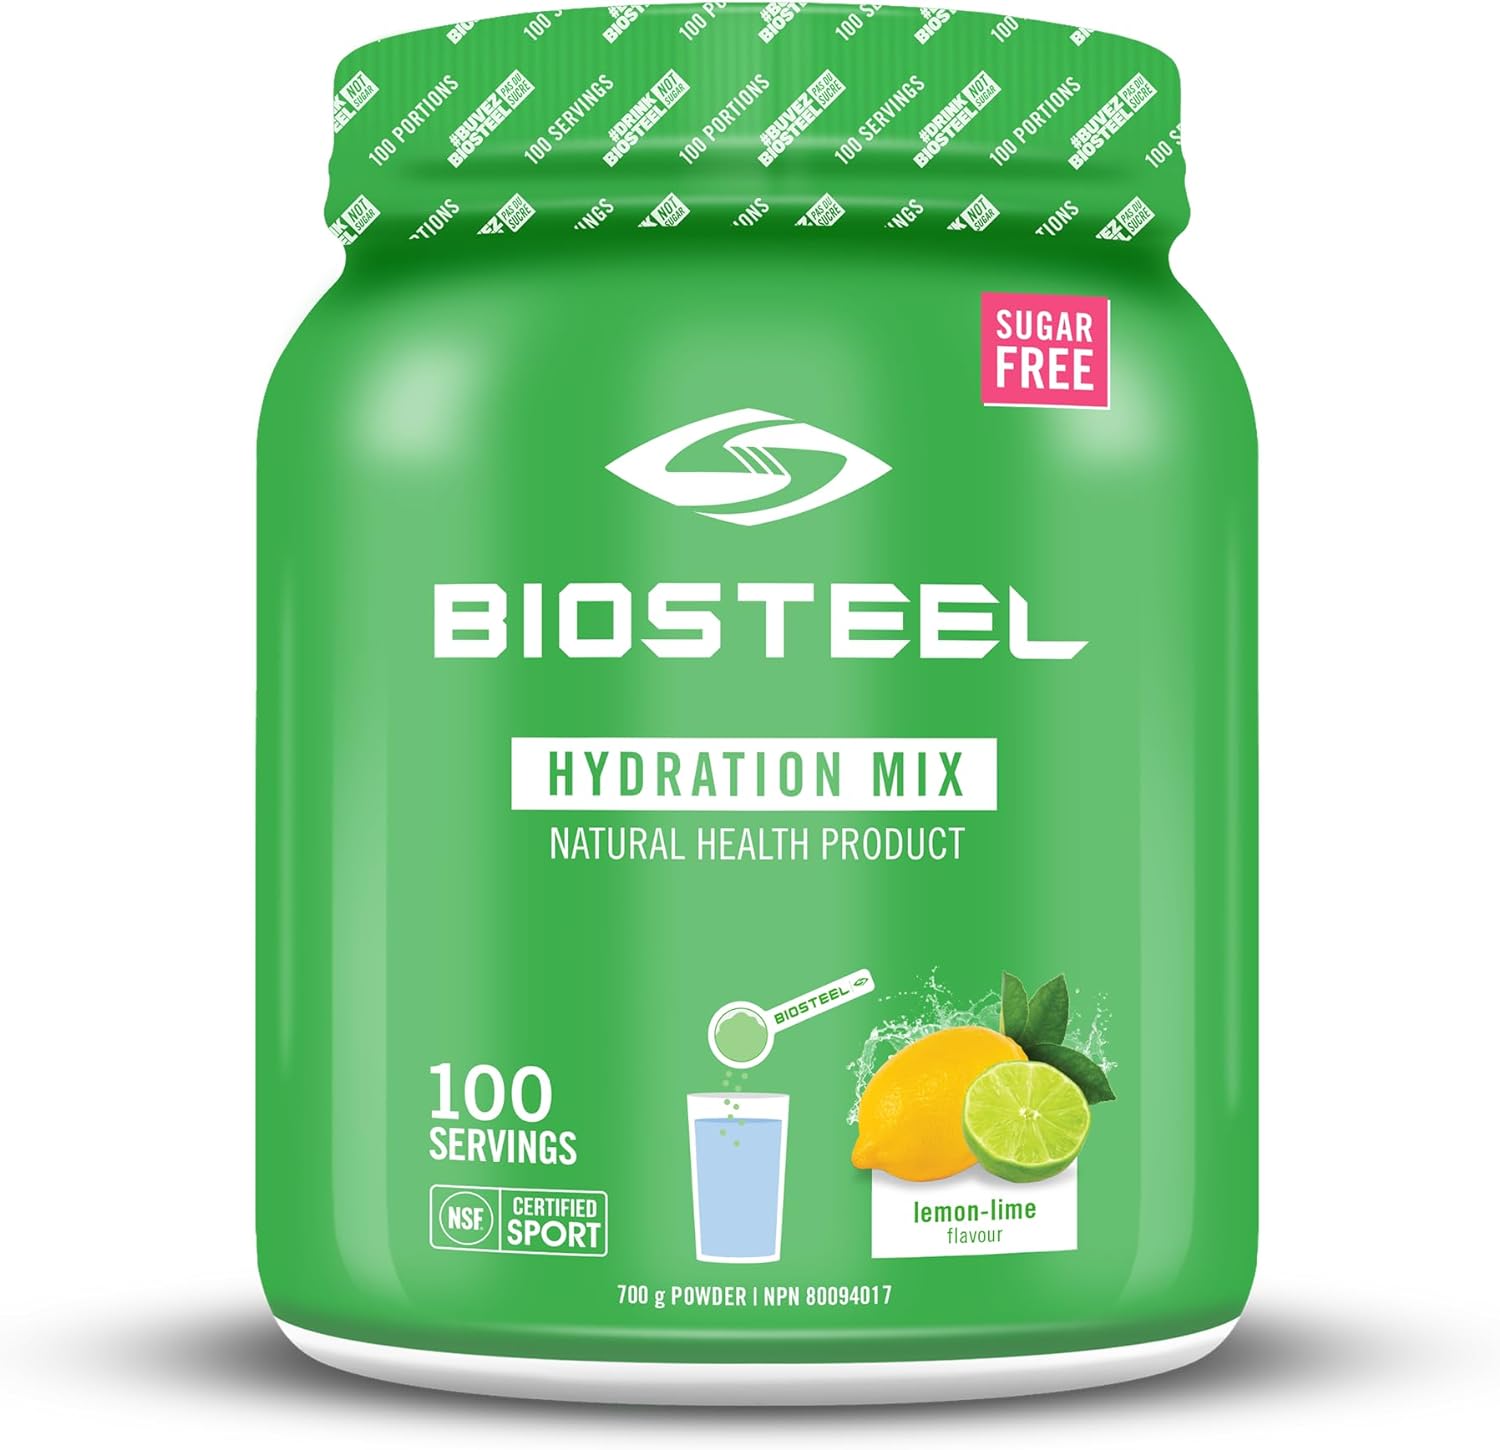 Bautura Hydratare Biosteel, Gust Lemon lime, cantitate 700g , 100 porti